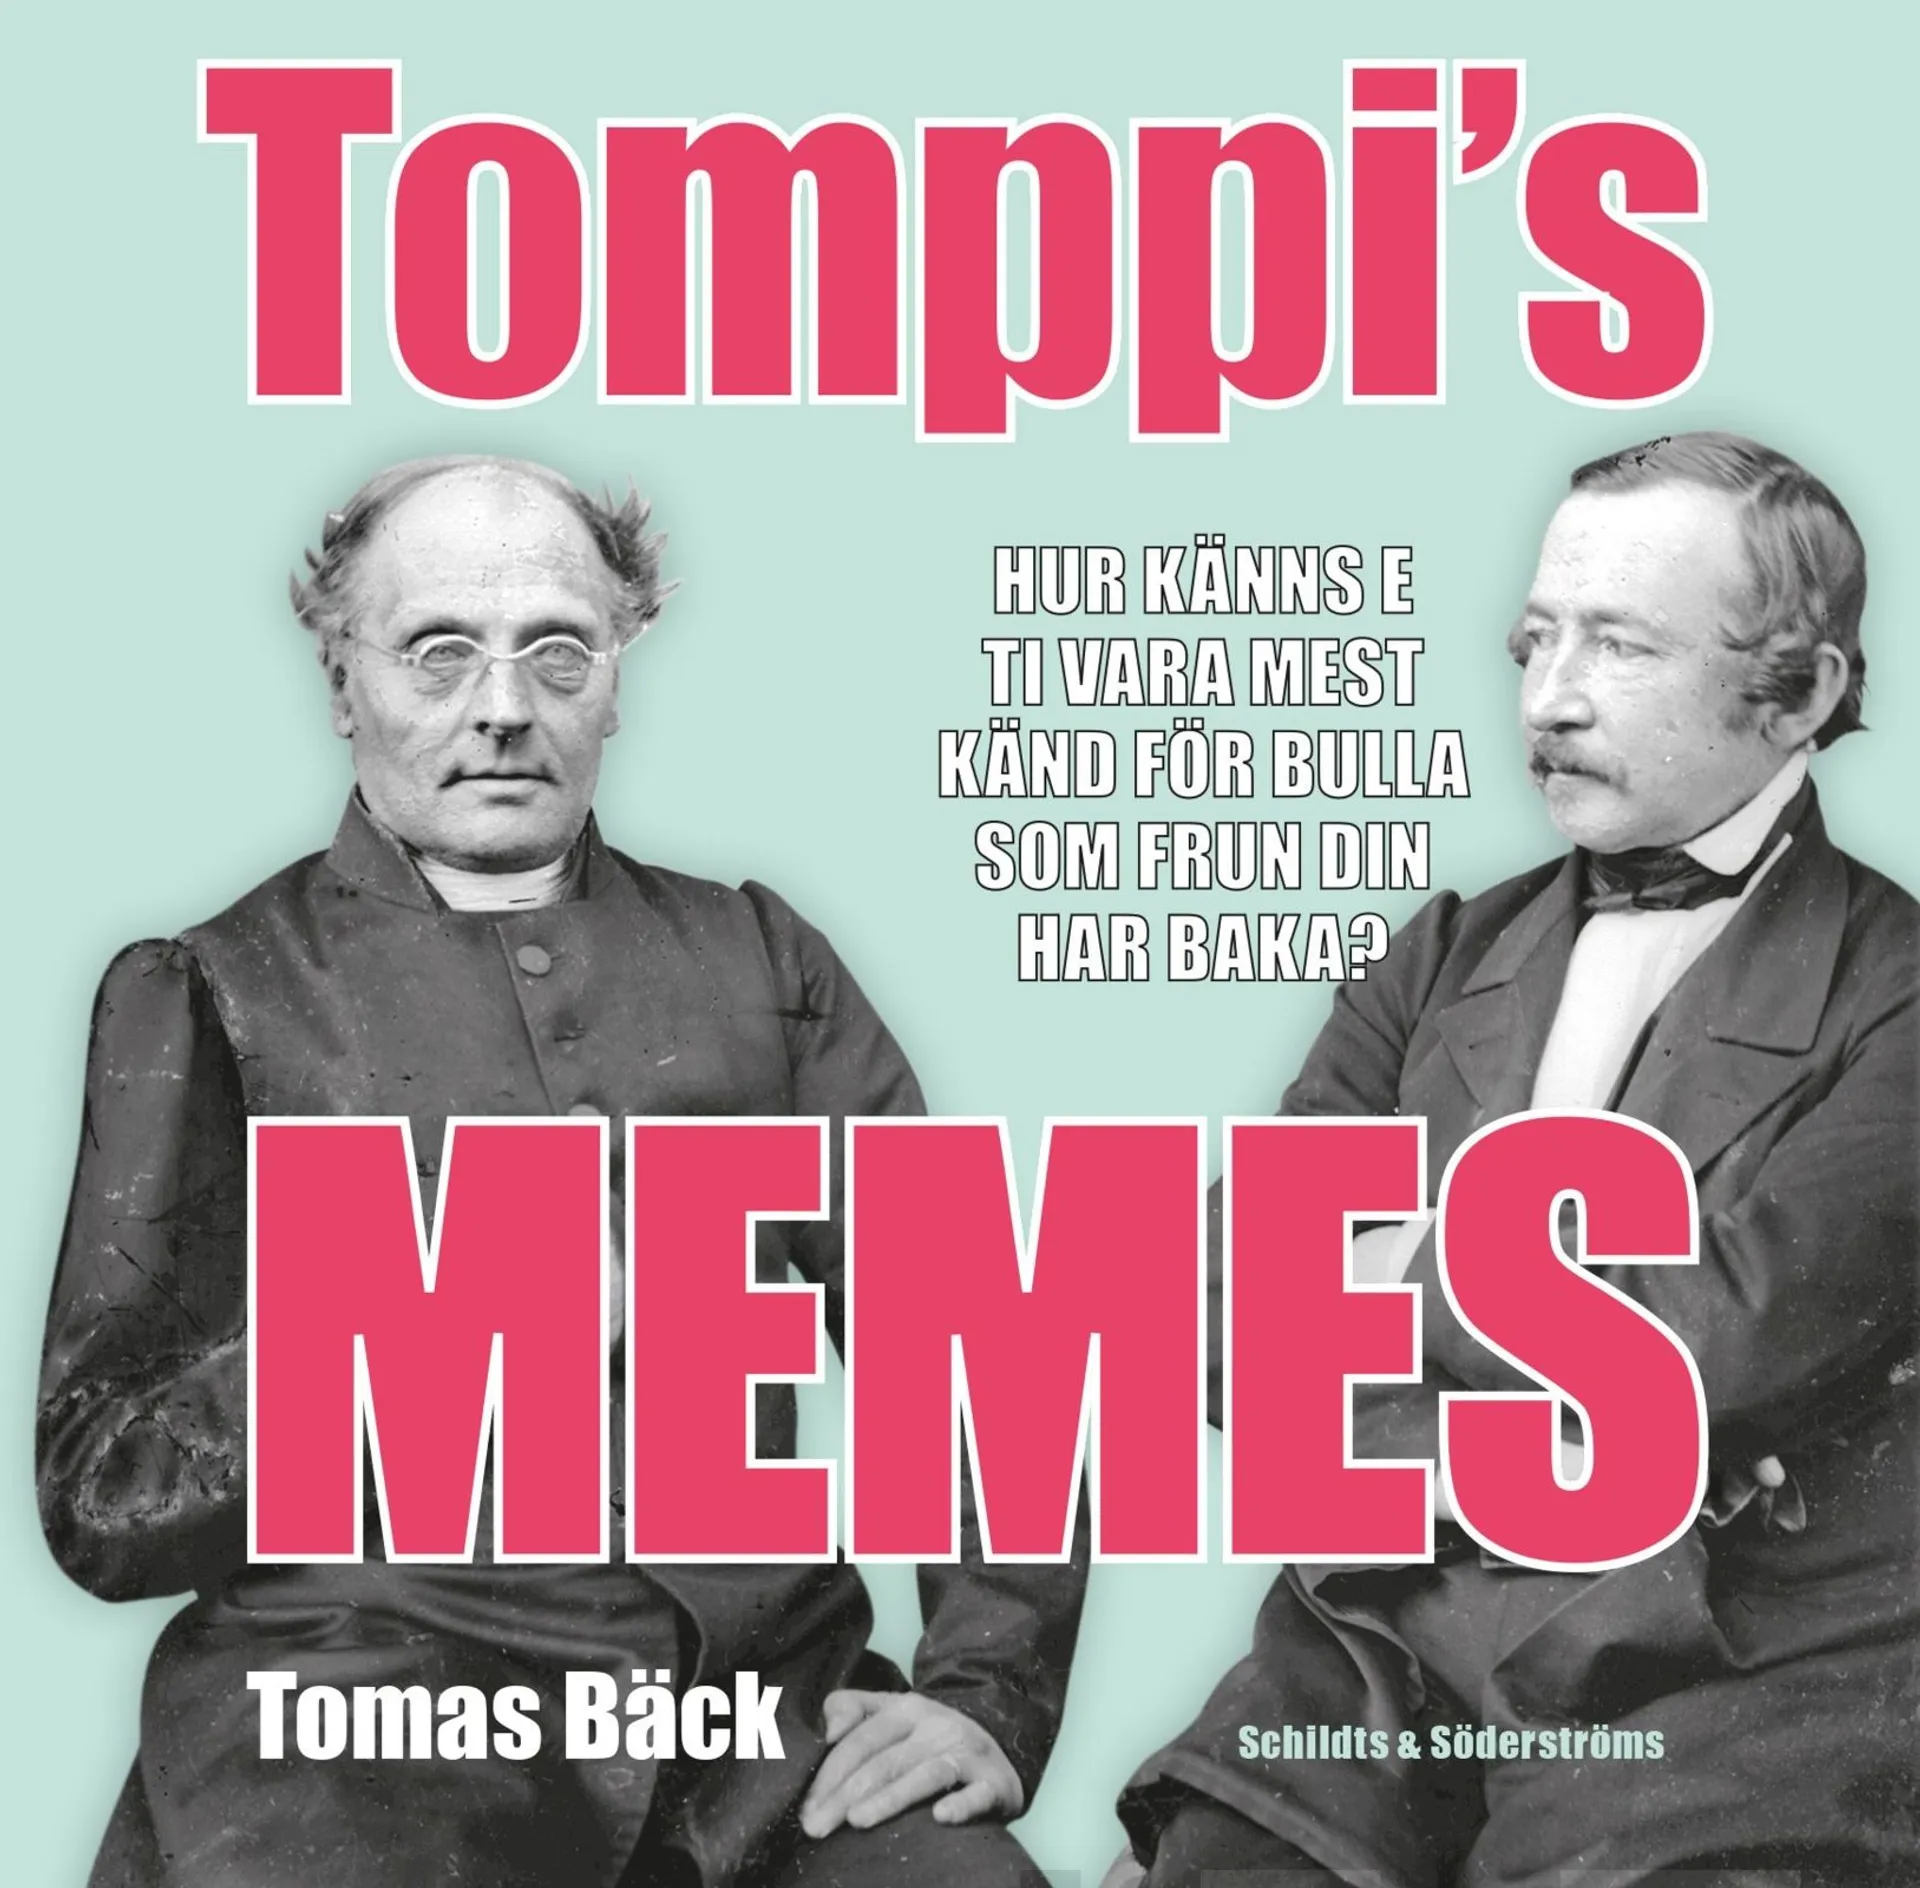 Bäck, Tomppi's memes